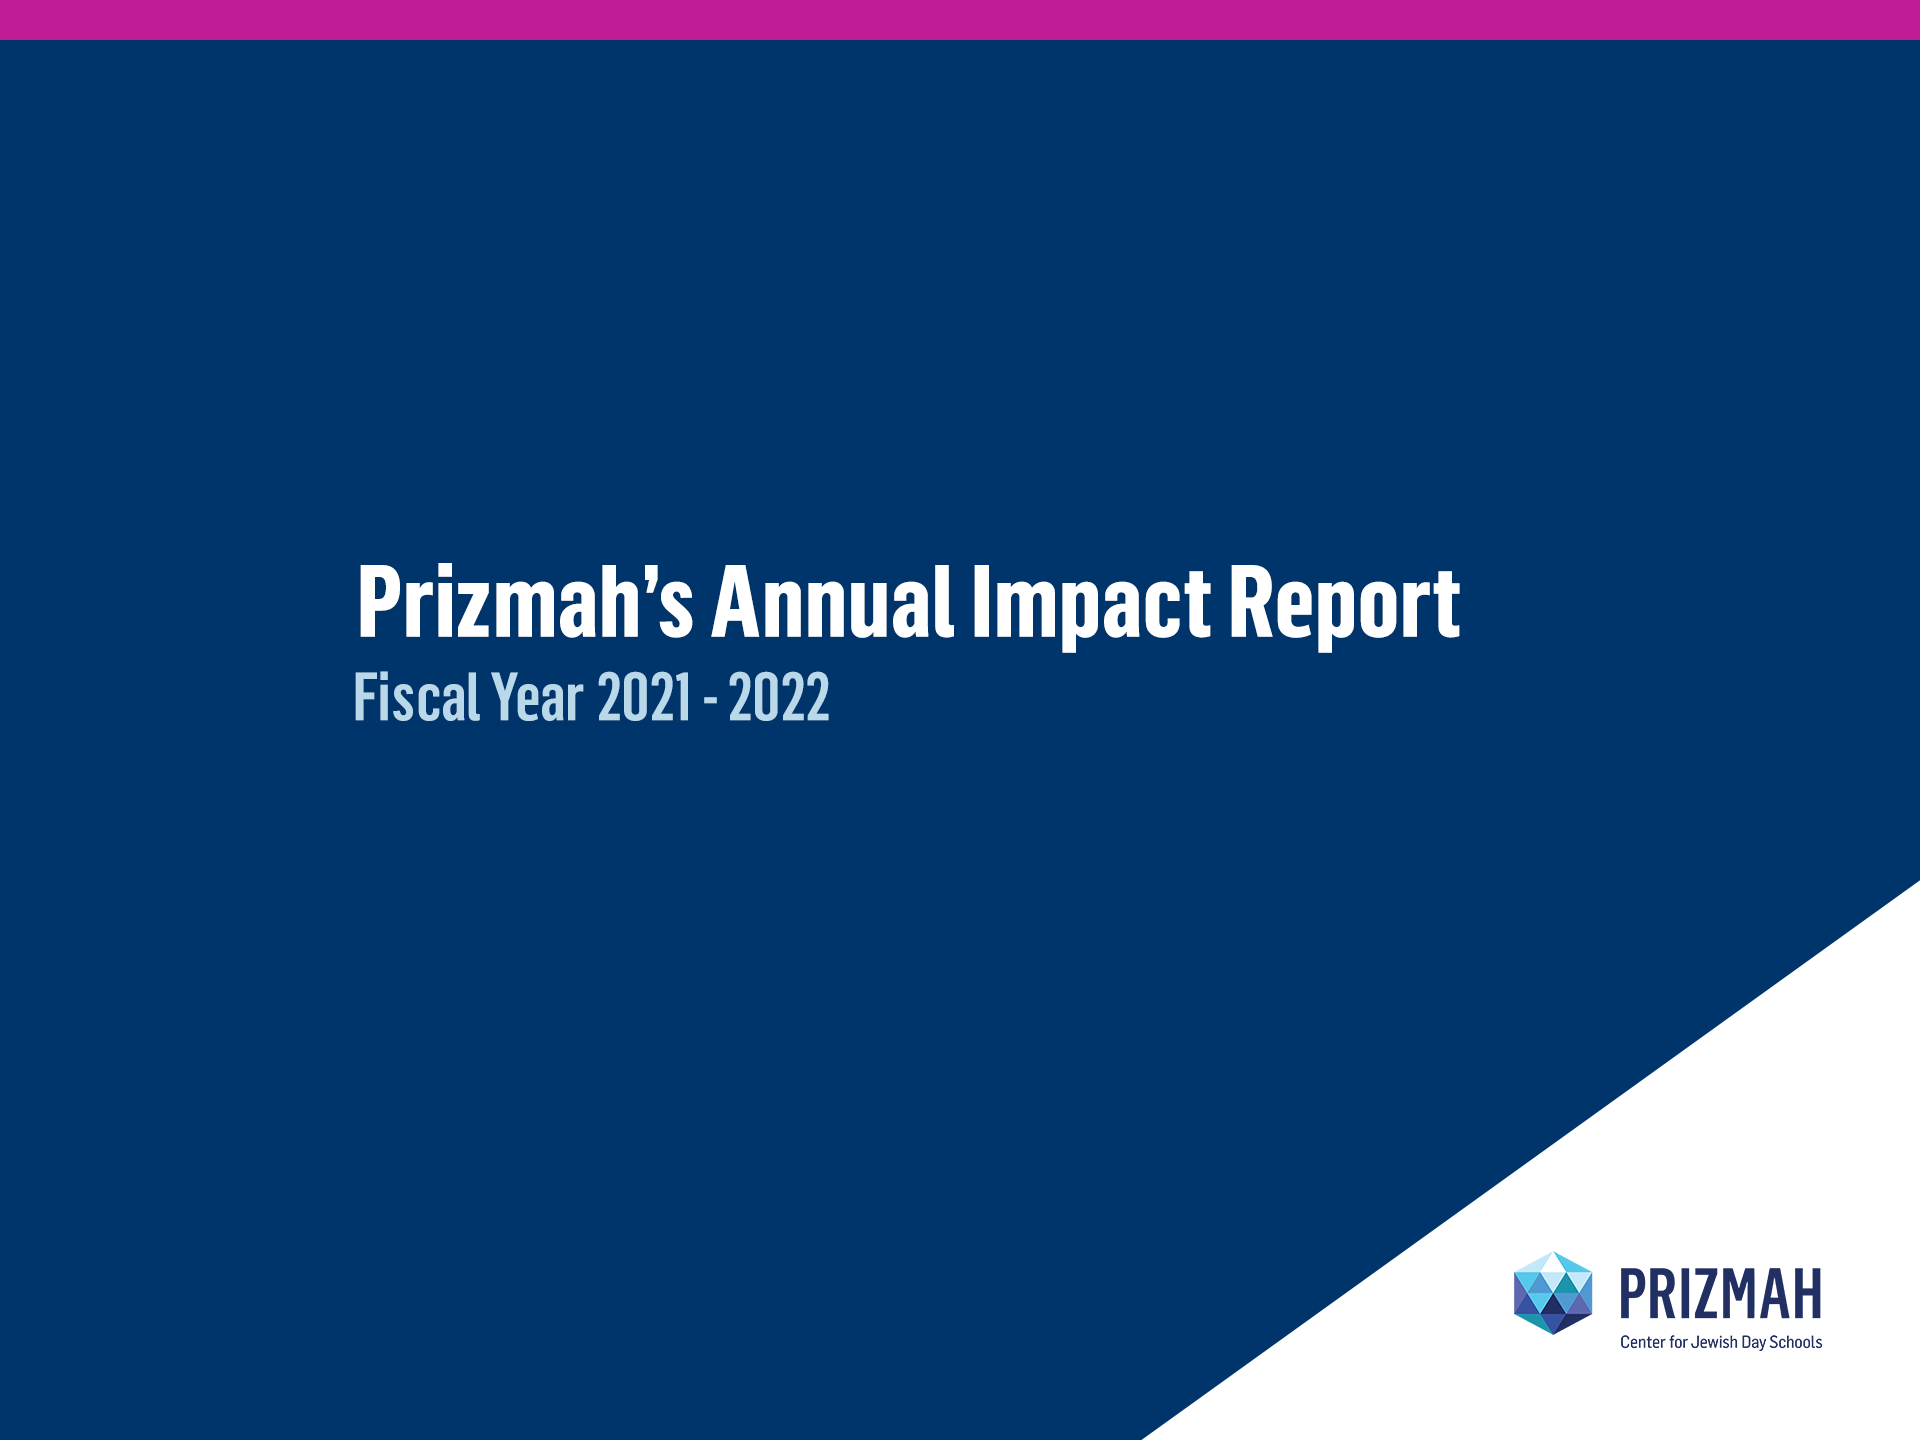 Prizmah's Annual Impact Report FY 21-22